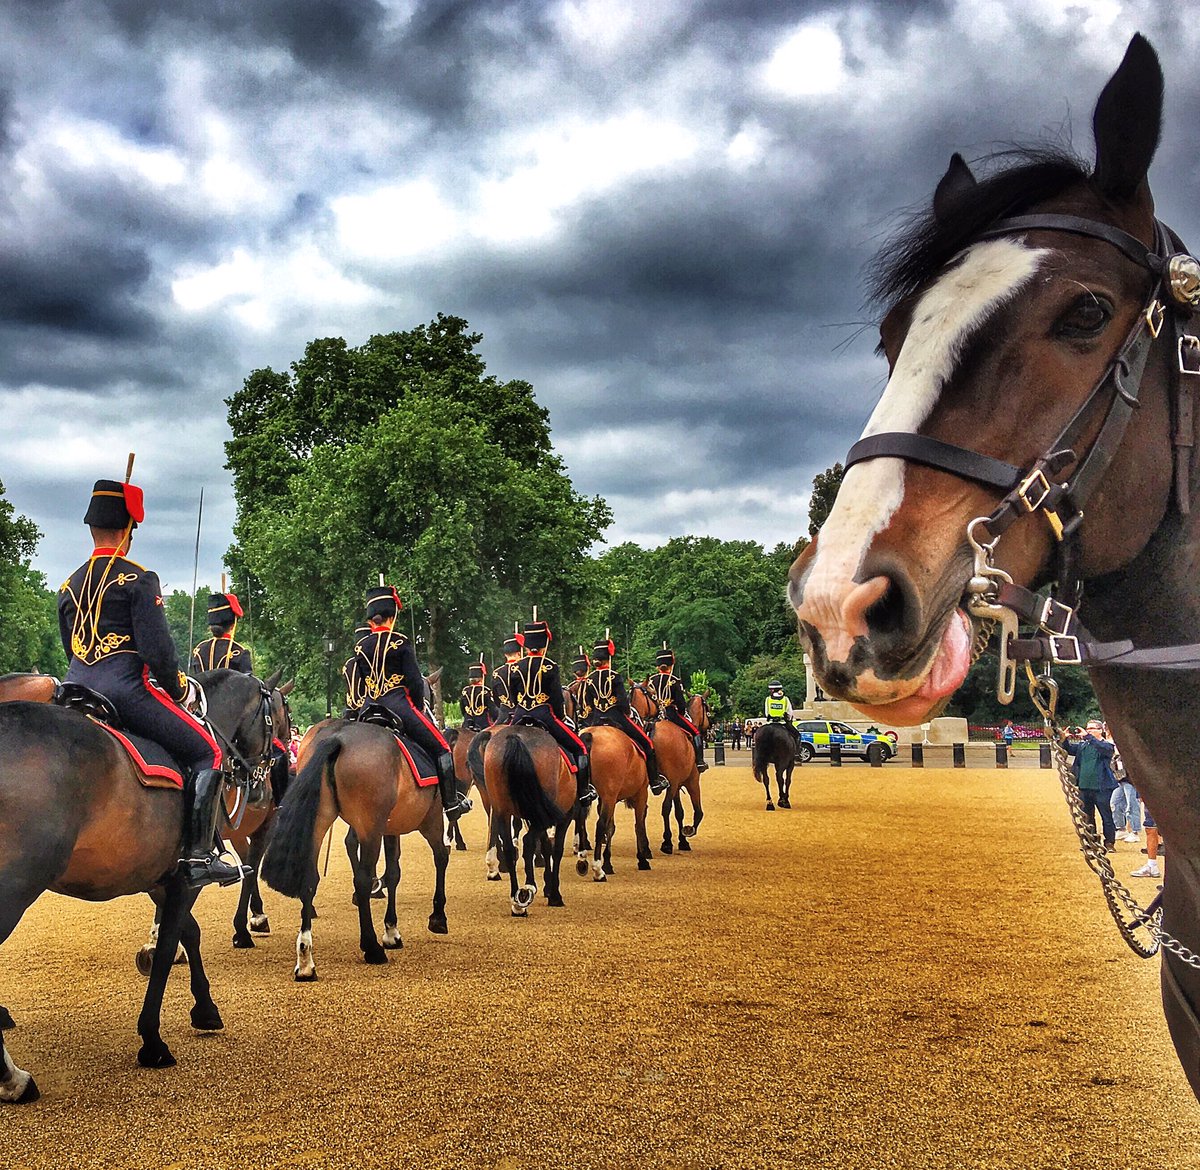 Photobombing changing the guard!
#london #londonlife #lovelondon  #timeout #MetroLDN #visitlondon #thisislondon #Mylondon  #londonislovinit #thelondonlifeinc #OutInLondon #uk #london4all  #changingtheguard  #horseguardsparade #kingstroop  #metpolice #horse #equine #policehorse